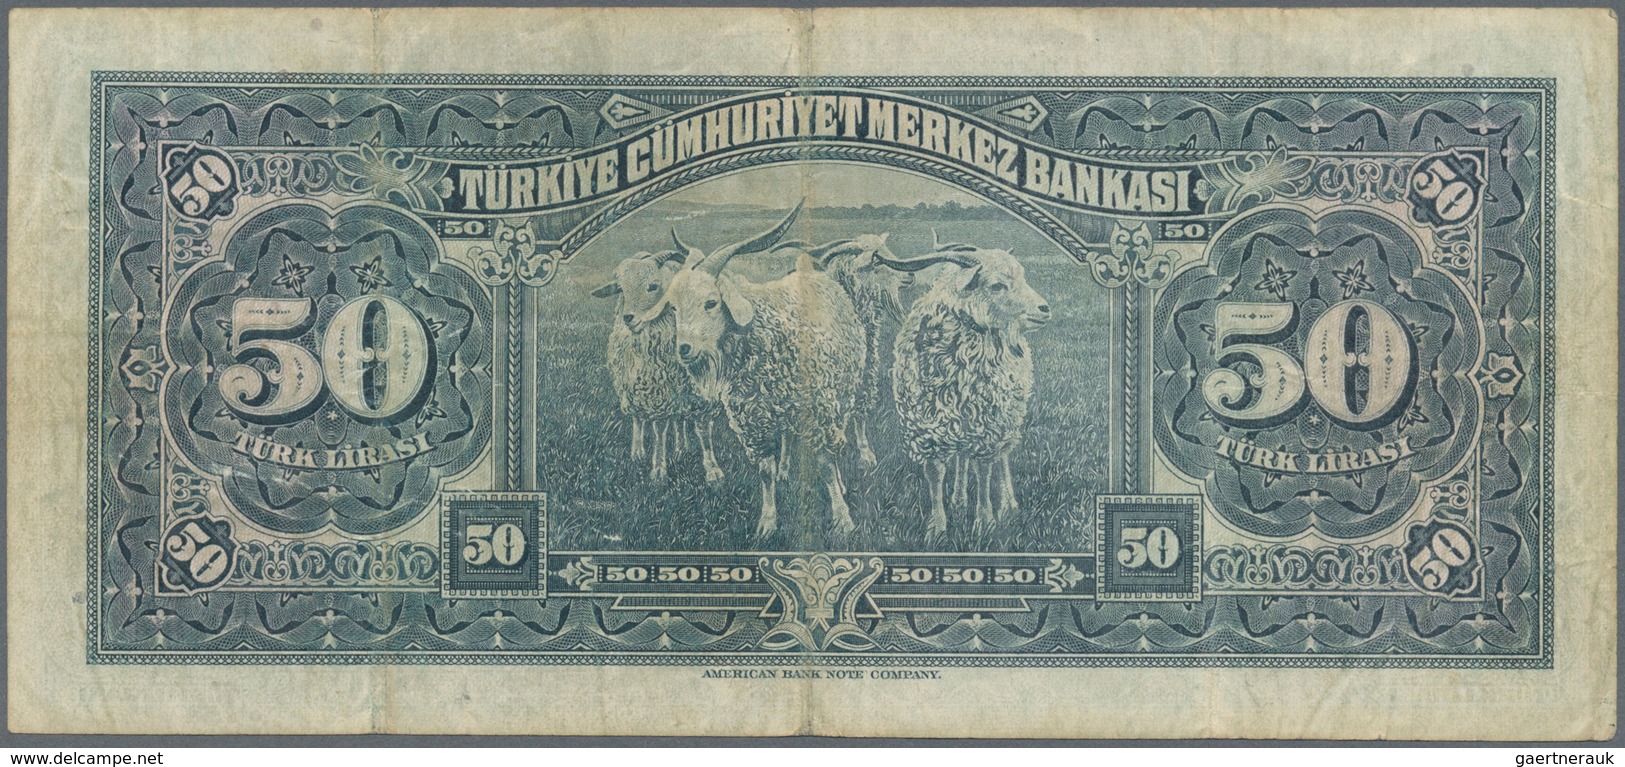 02536 Turkey / Türkei: 50 Lirasi L. 1930 (1942-1947) "?nönü" - 3rd Issue, P.143, Still A Nice Note With So - Turchia